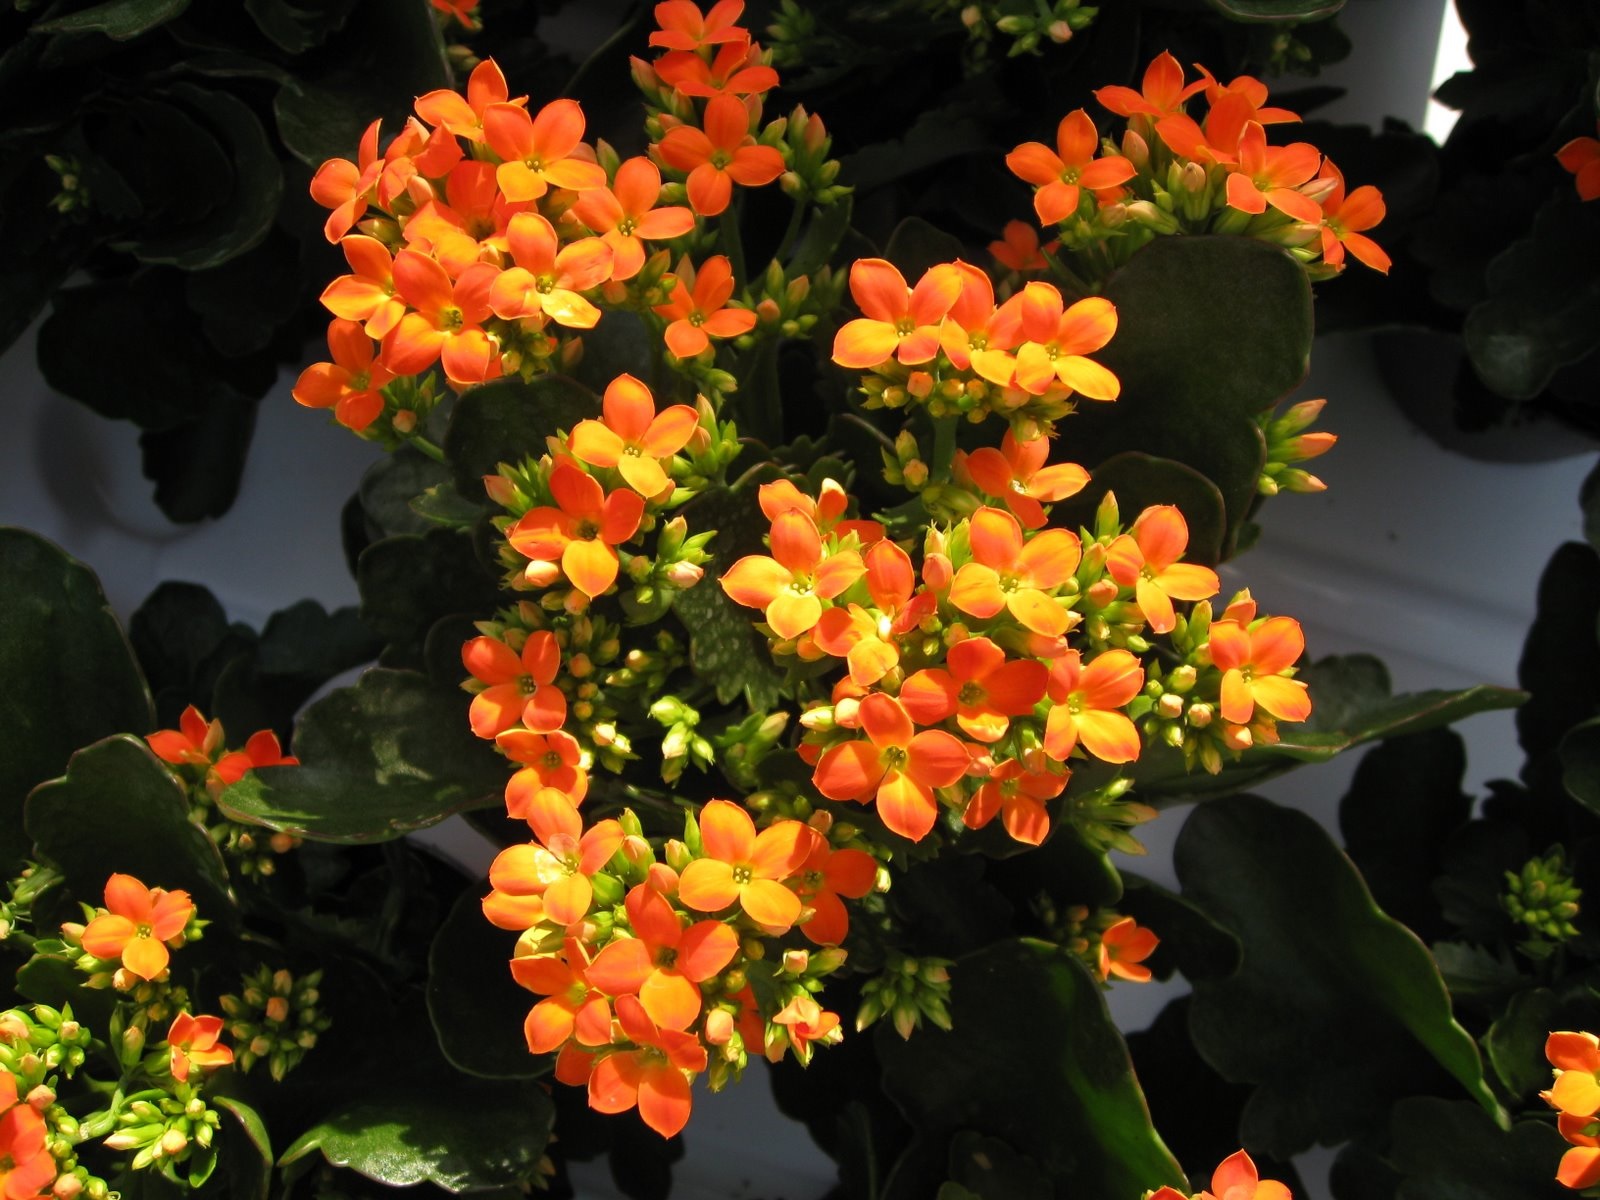 Kalanchoe de floración amarillo-naranja